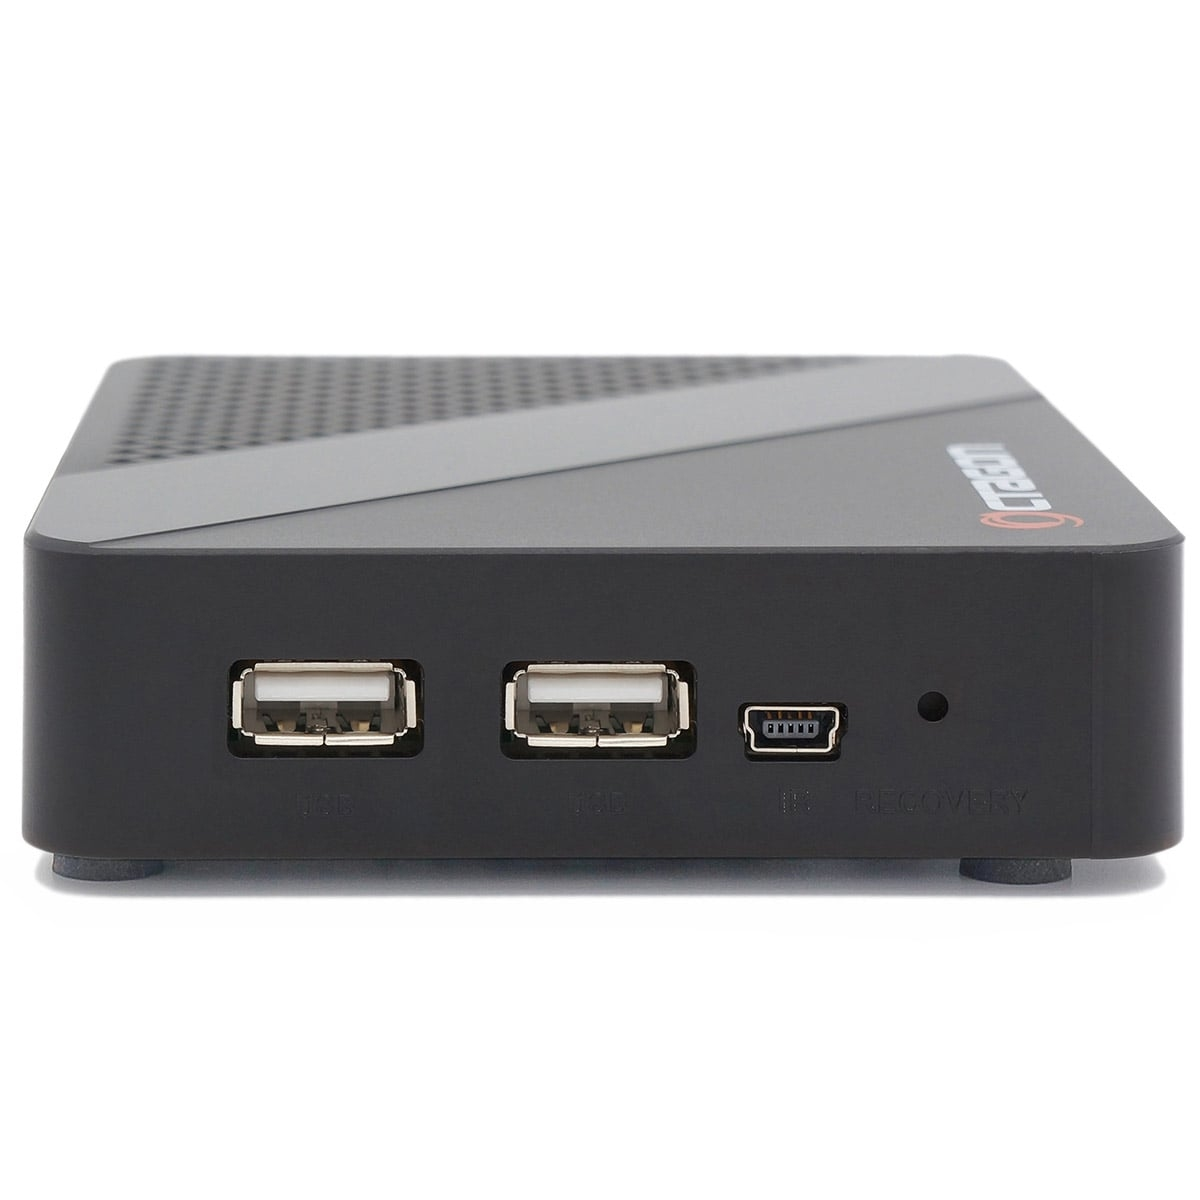 OCTAGON Octagon SX887 Full HD LAN Linux IP-Receiver (Schwarz) Mediaplayer H.265 1080p